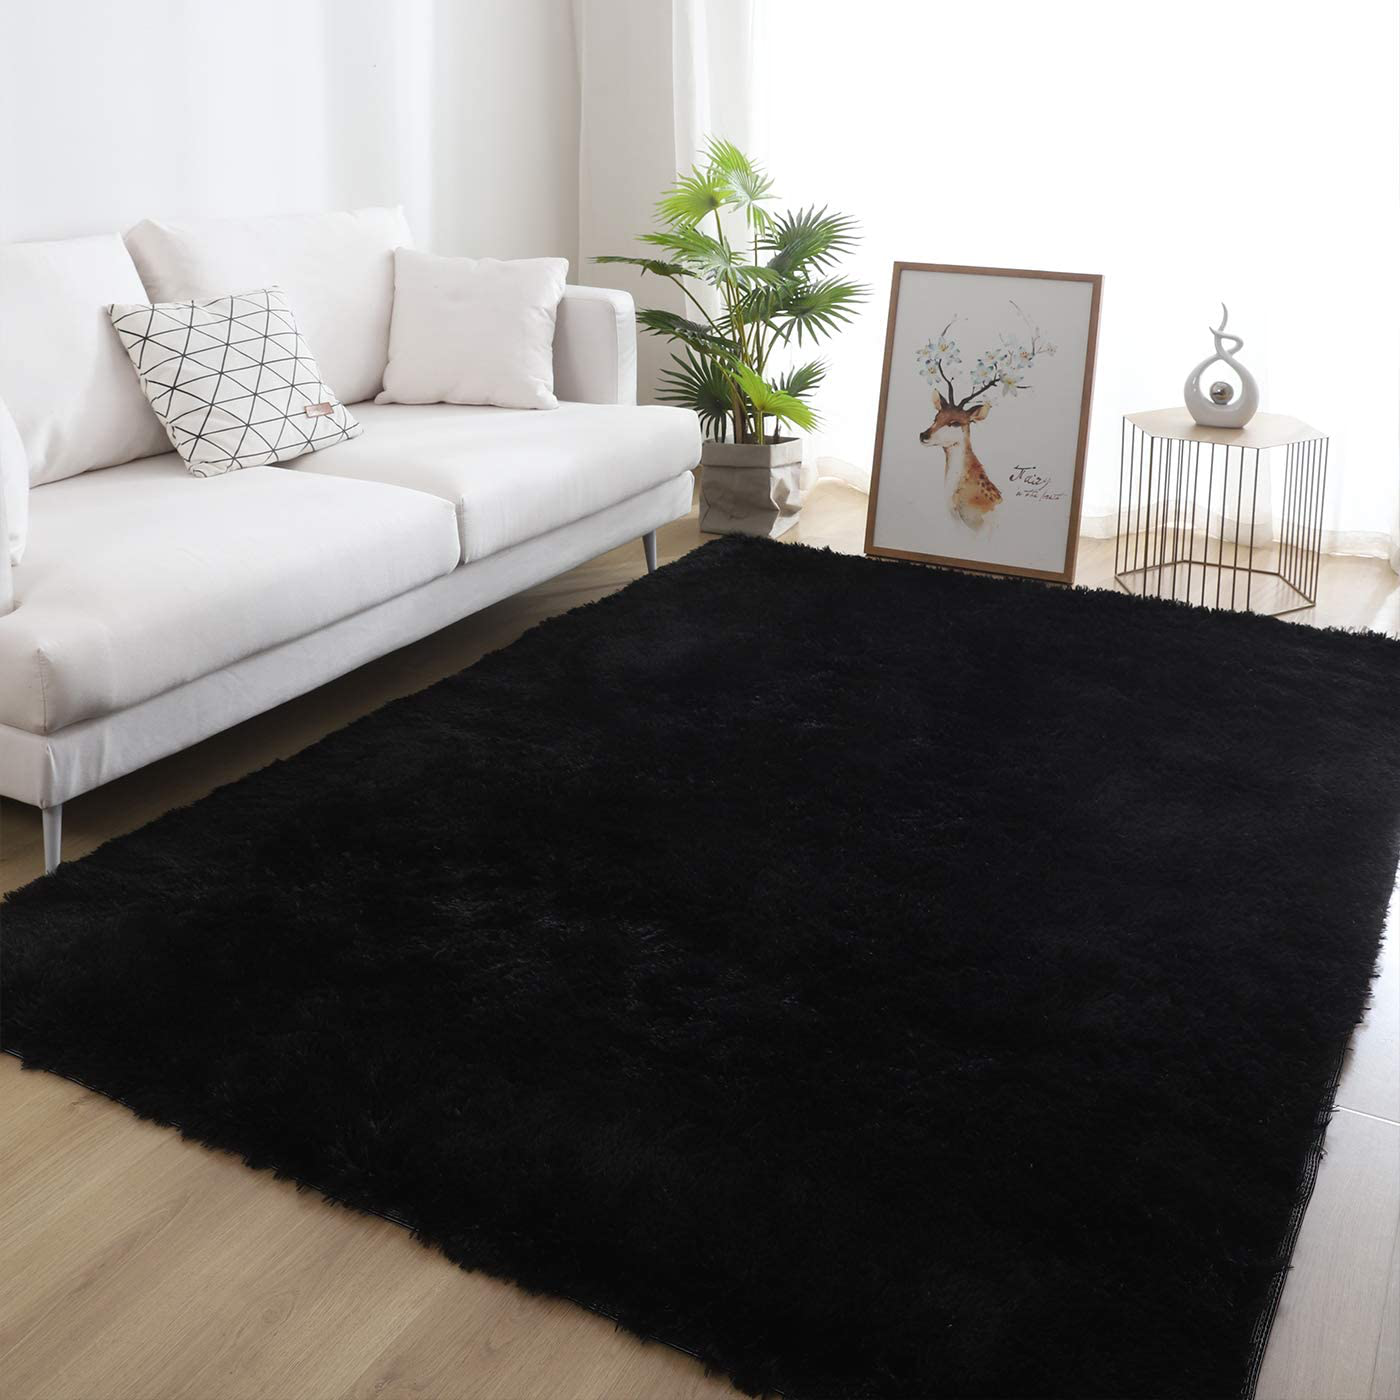 6x9 Black Area Rugs for Living Room Super Soft Floor Fluffy Carpet Natural Comfy Thick Fur Mat Princess Girls Room Rug